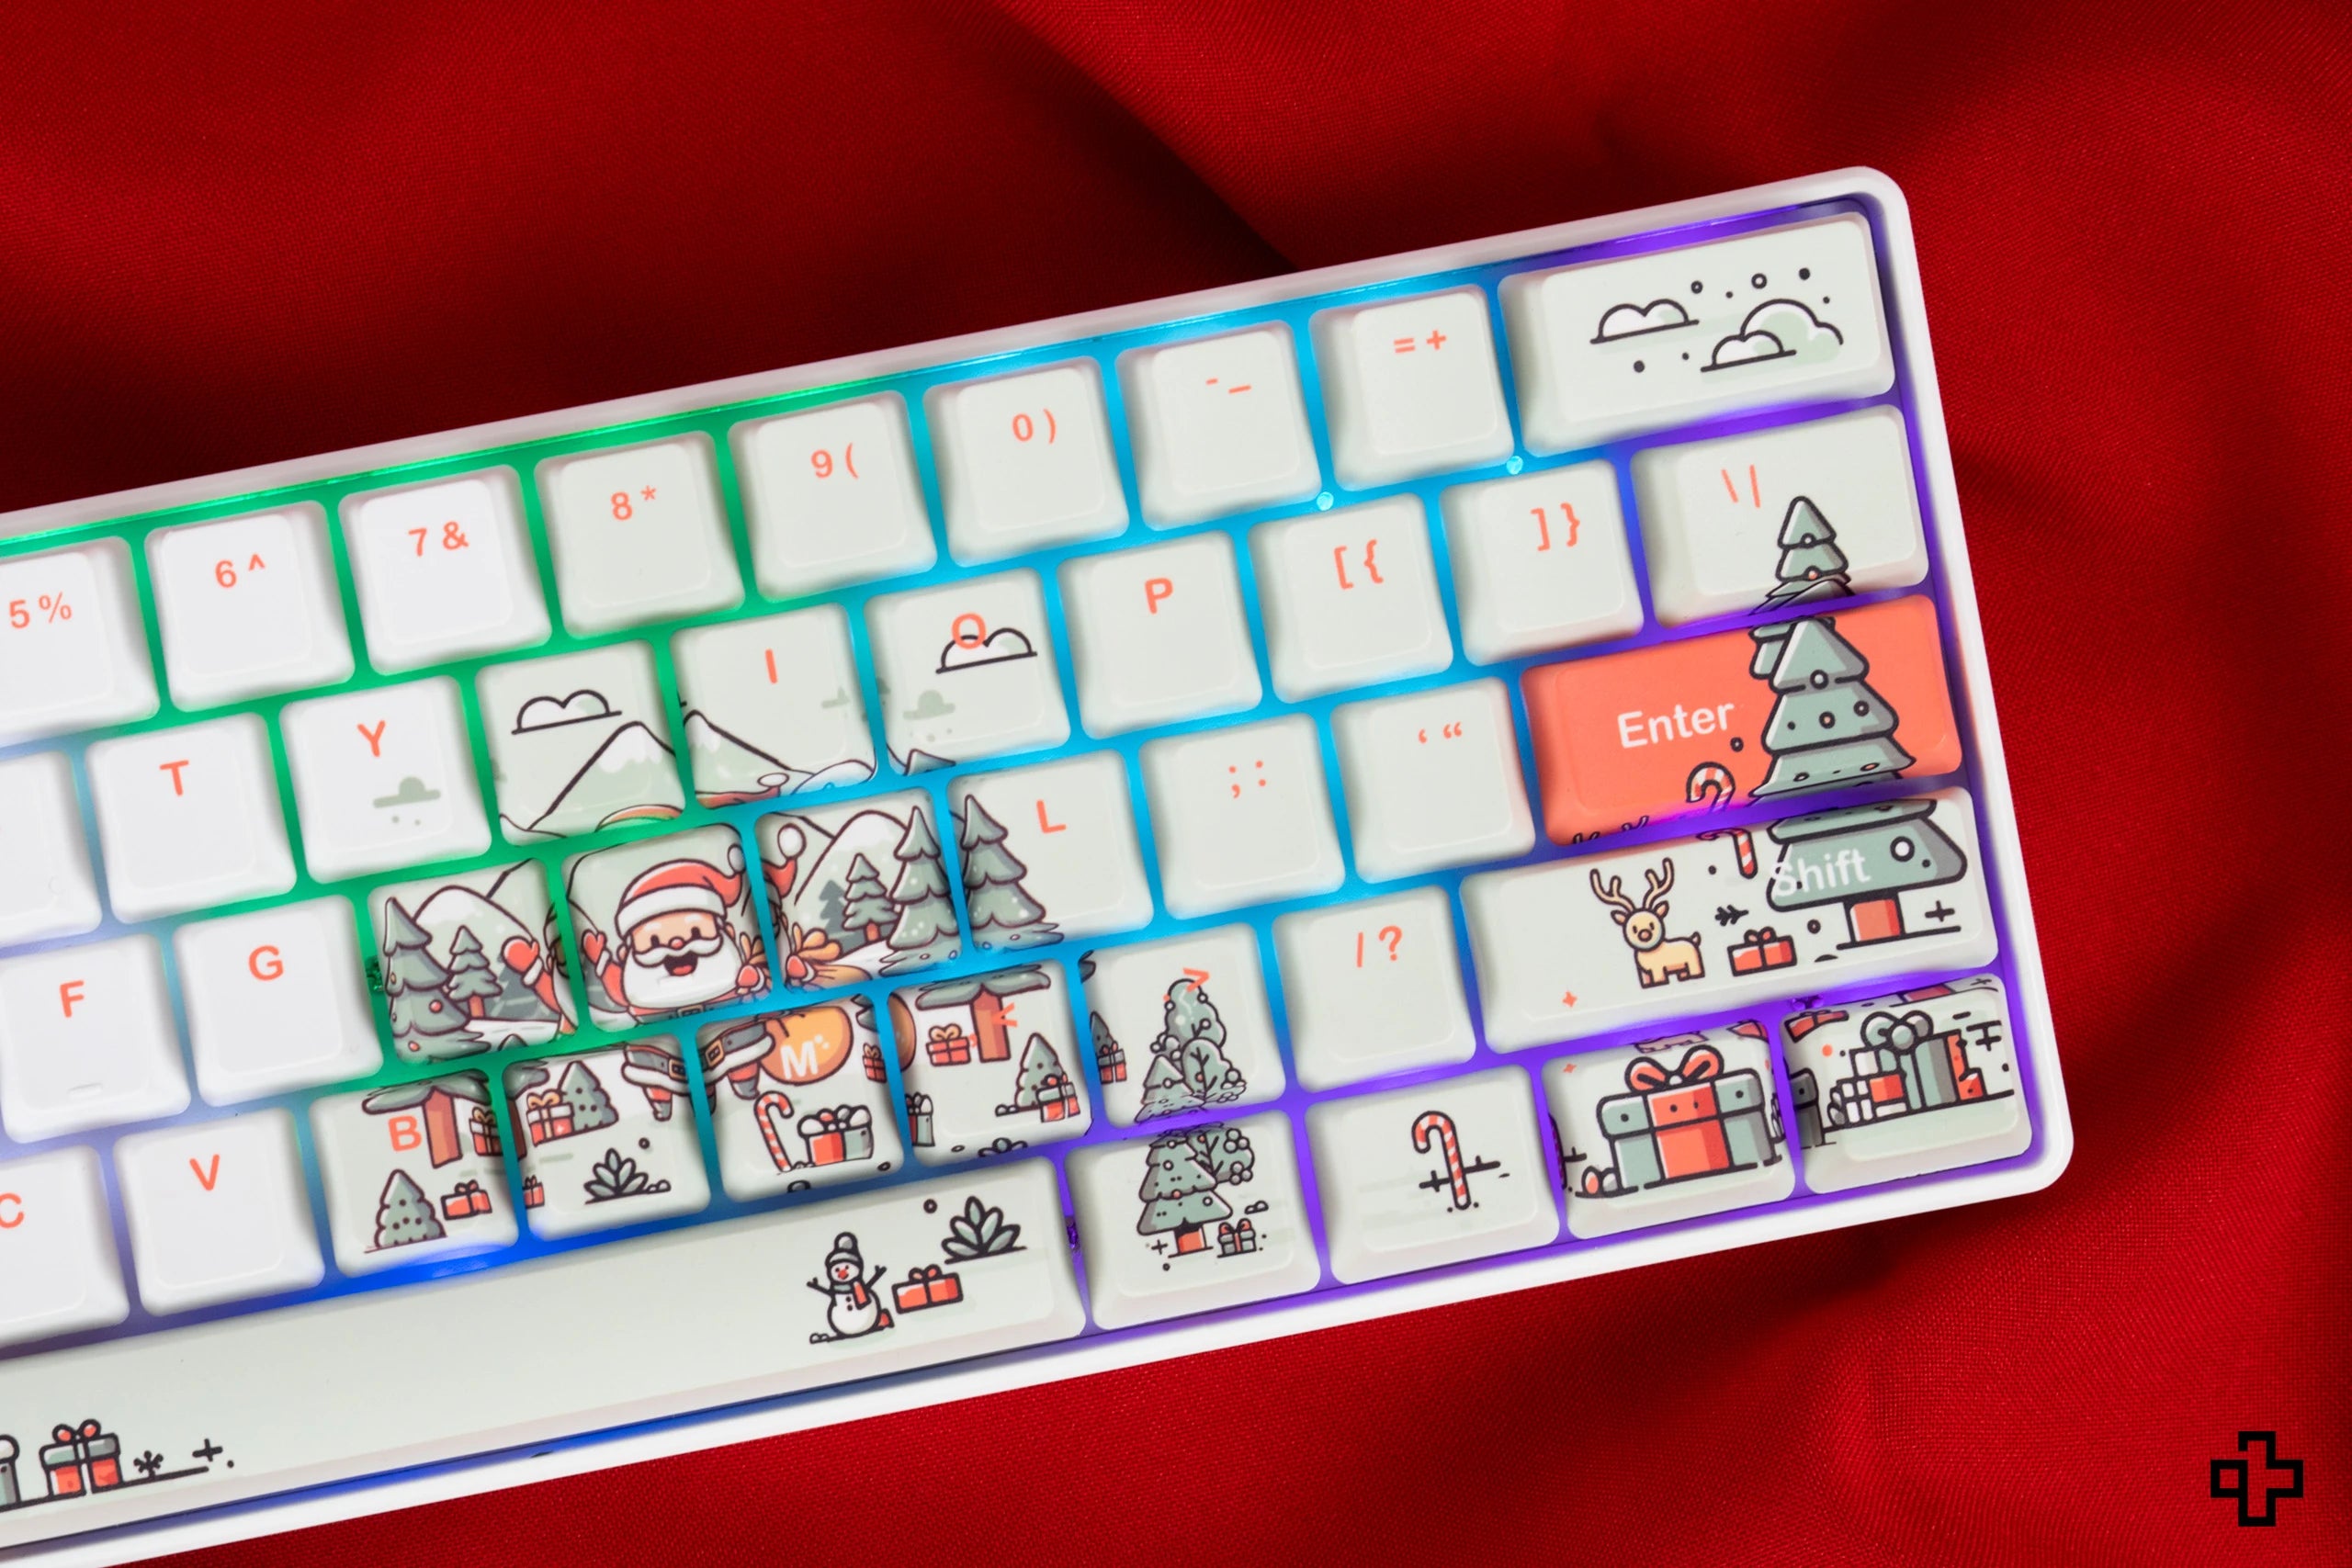 QwertyKey Santa Hotswap Mechanical Christmas Gaming Keyboard